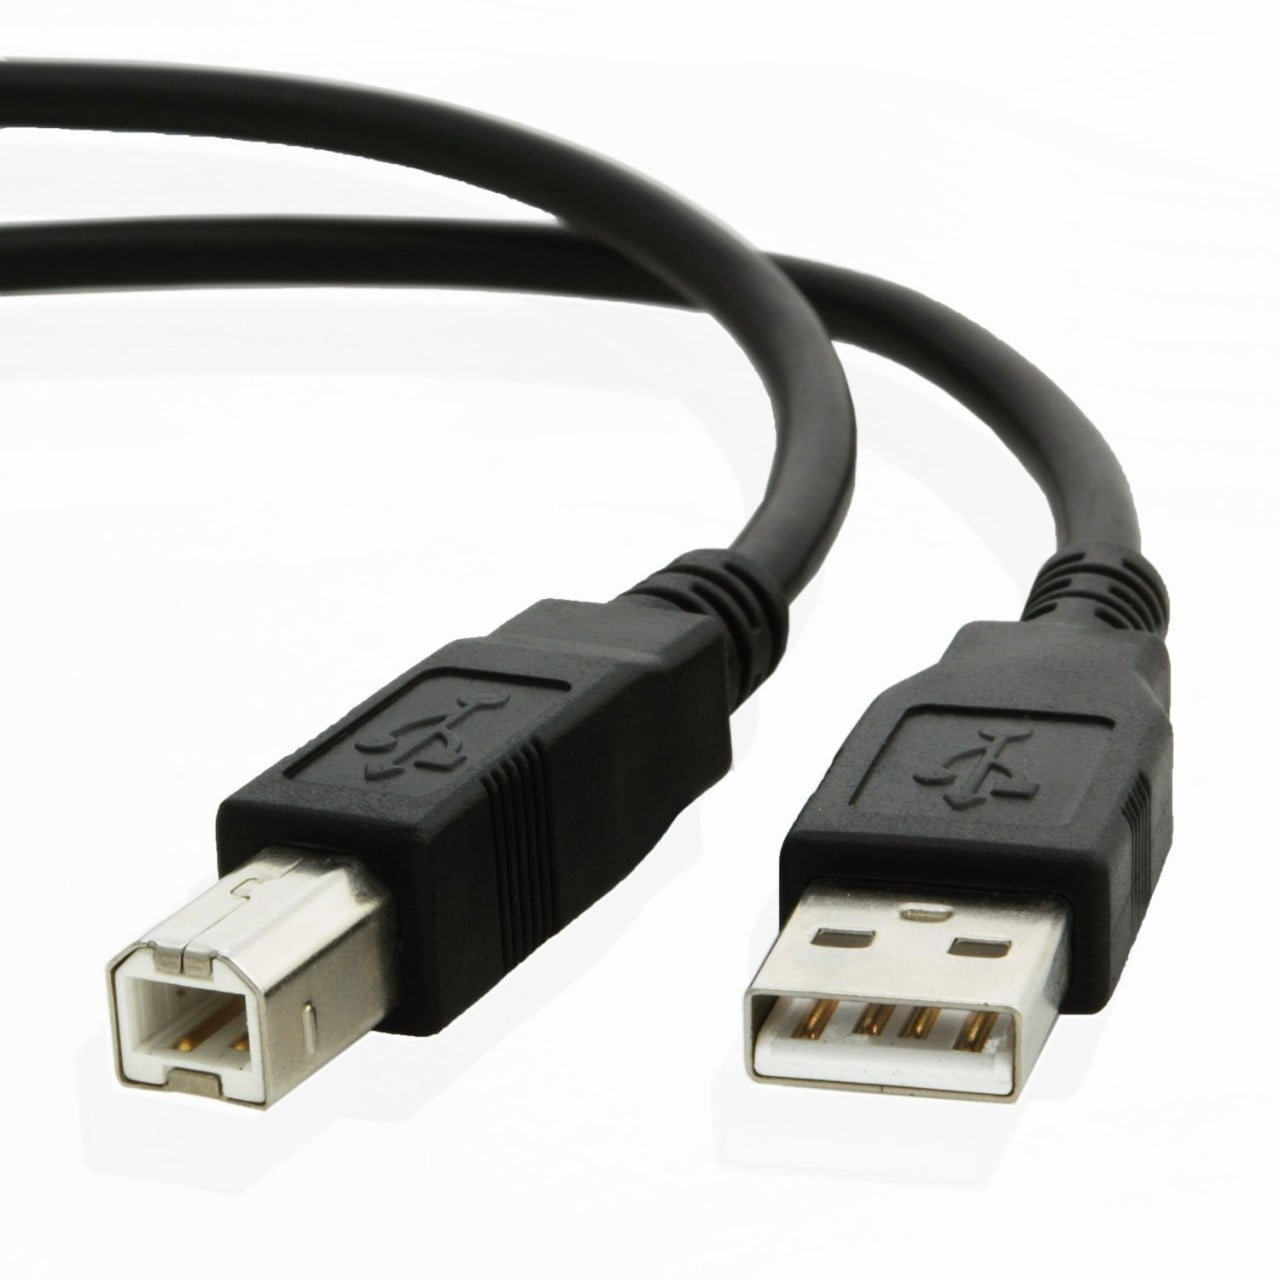 2 LENGTHS! Cricut to PC USB Cable ORIGINAL Works Great ProvoCraft Cricut 